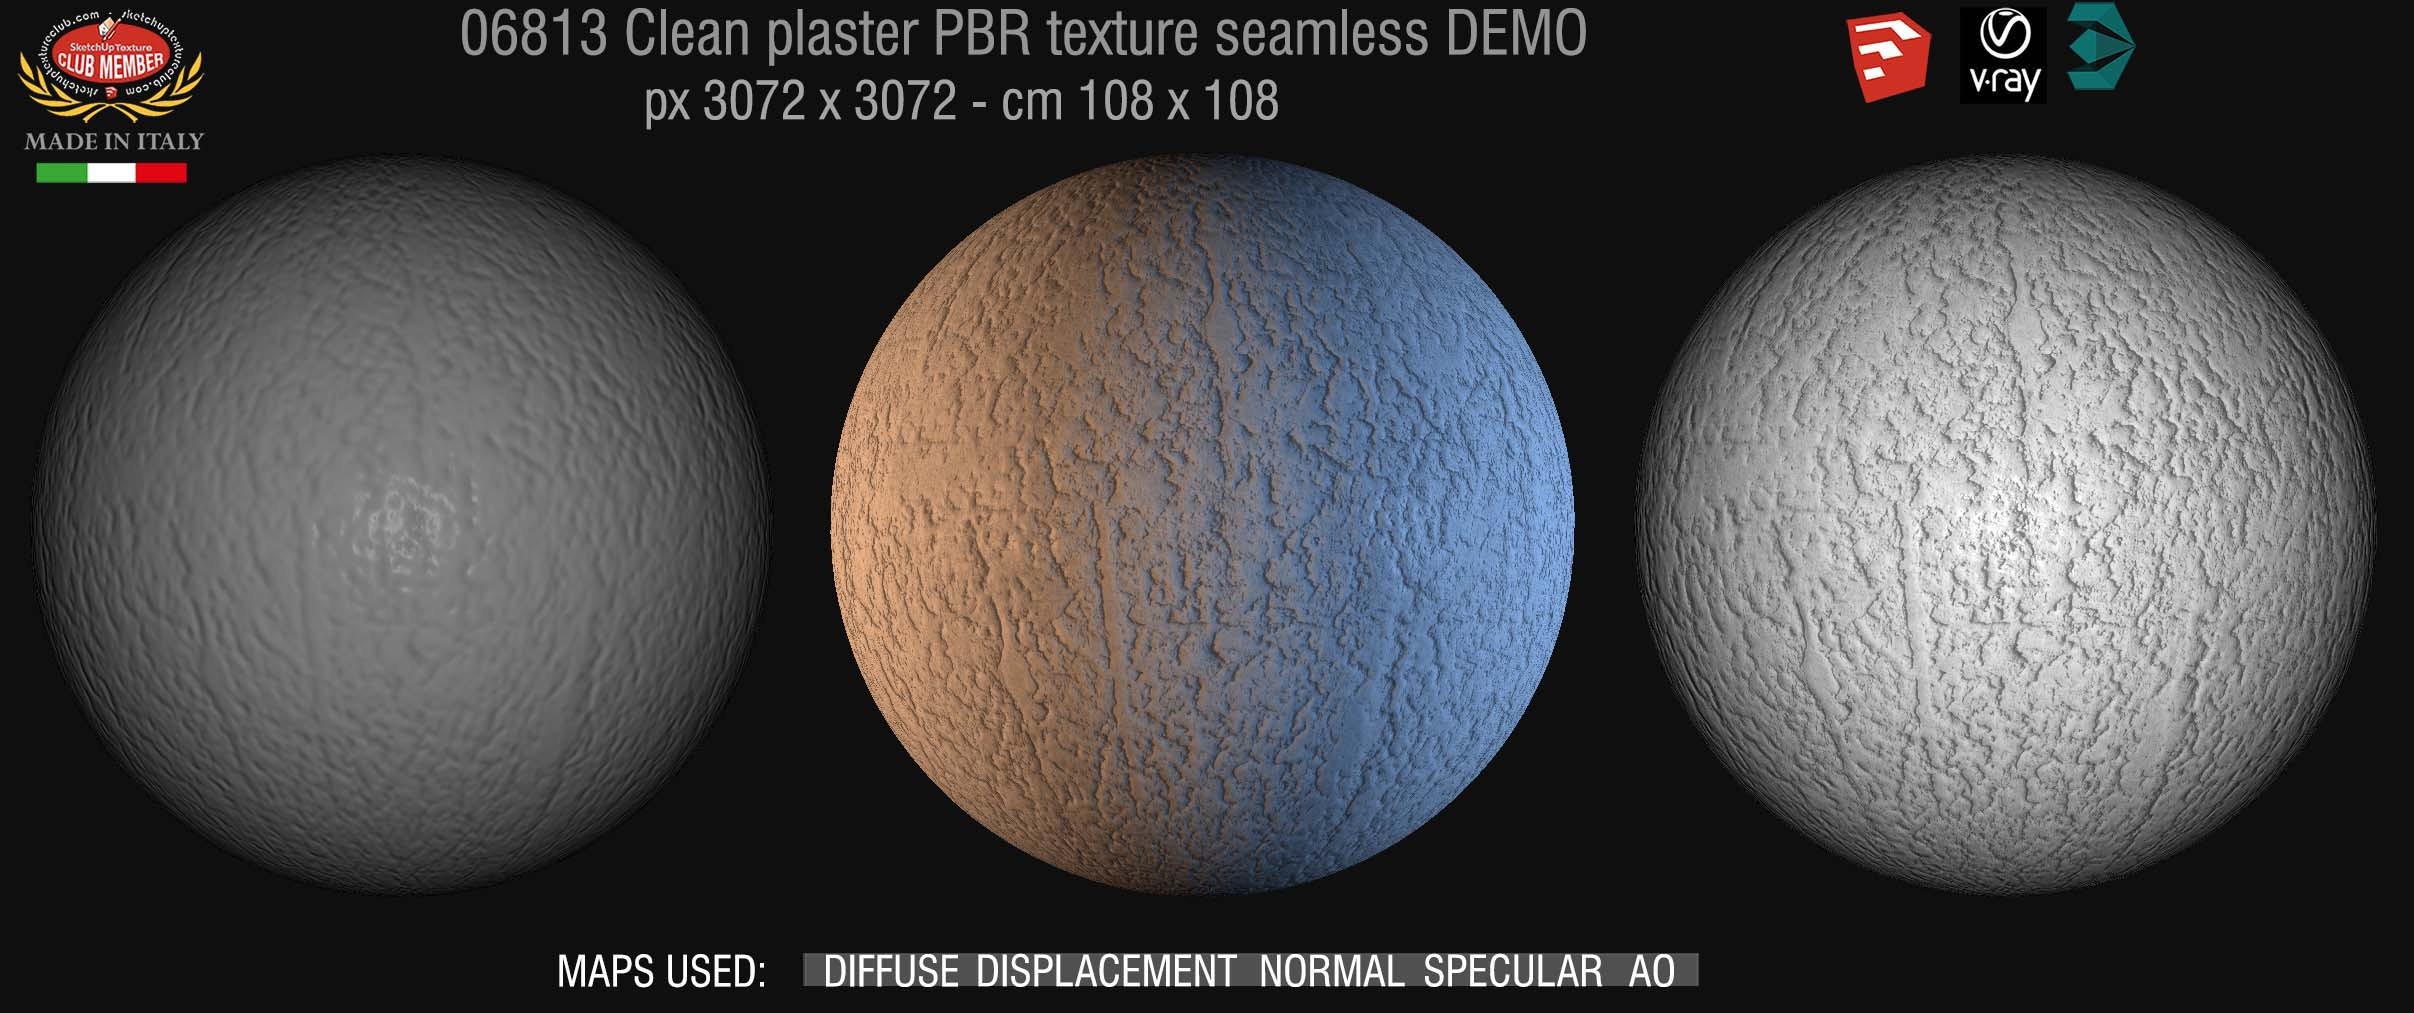 06813 Clean plaster PBR texture seamless DEMO